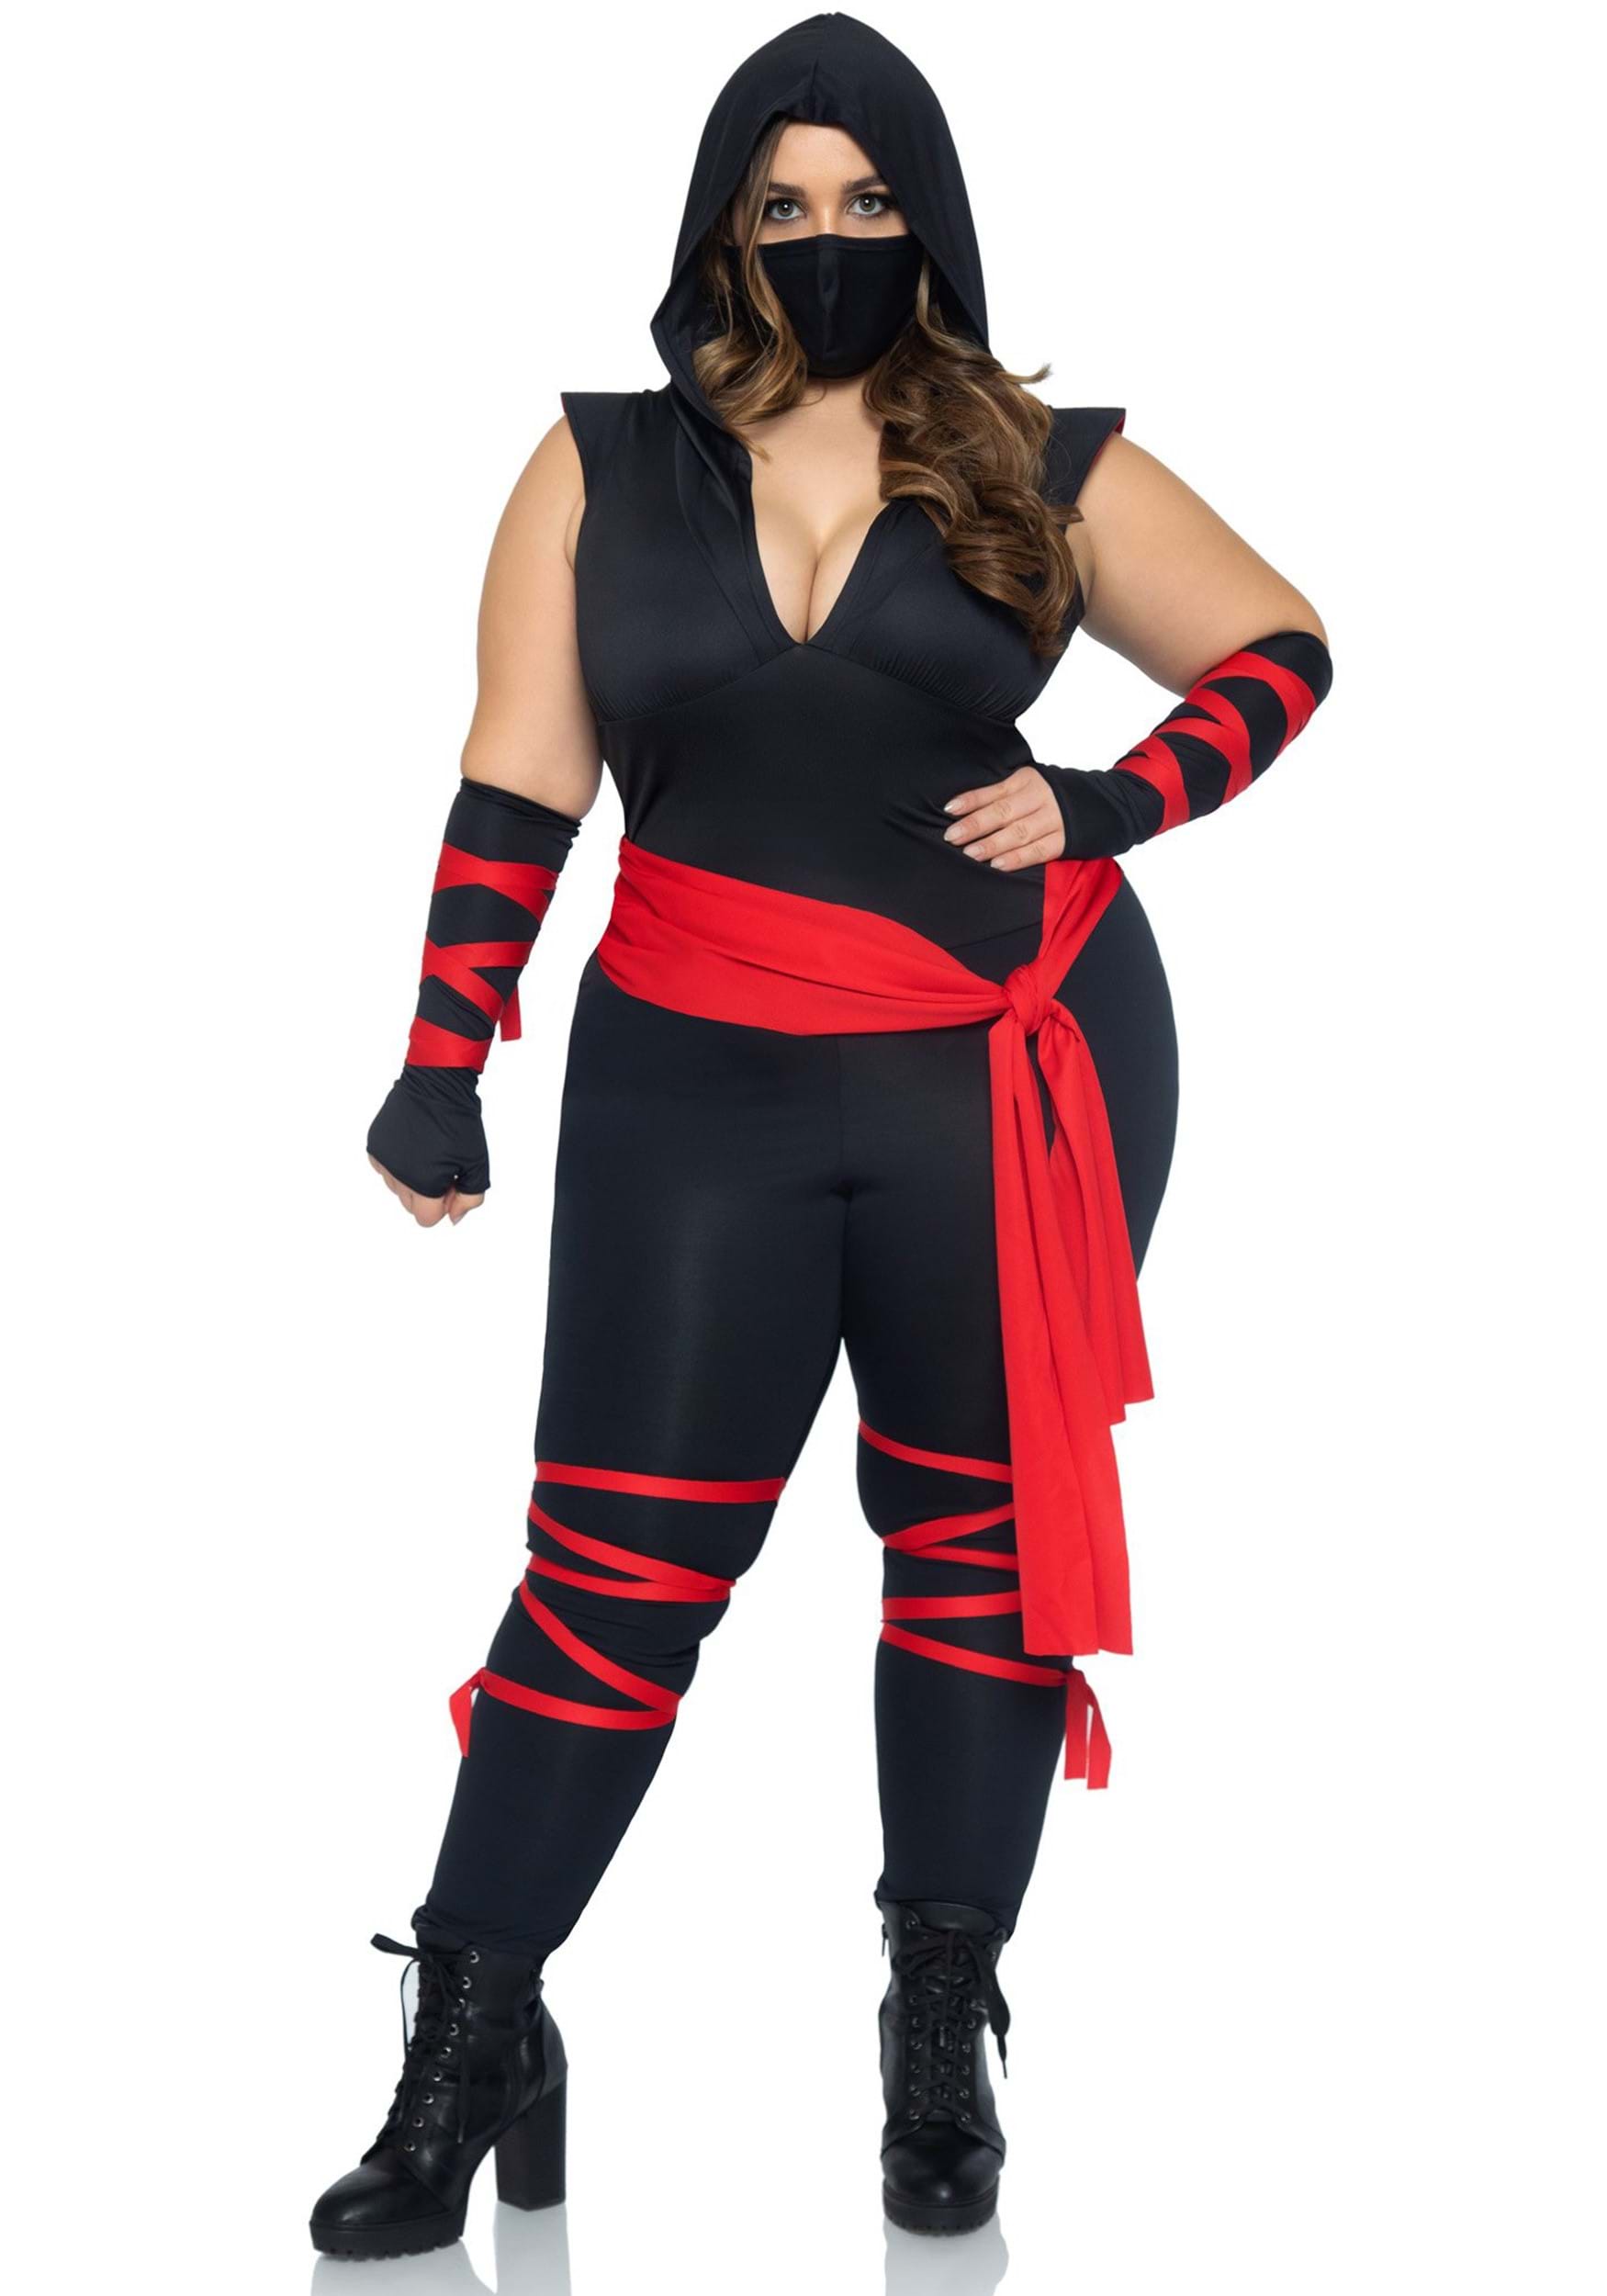 Photos - Fancy Dress MKW Leg Avenue Plus Size Sexy Deadly Ninja Costume for Women Black/Red LE8 